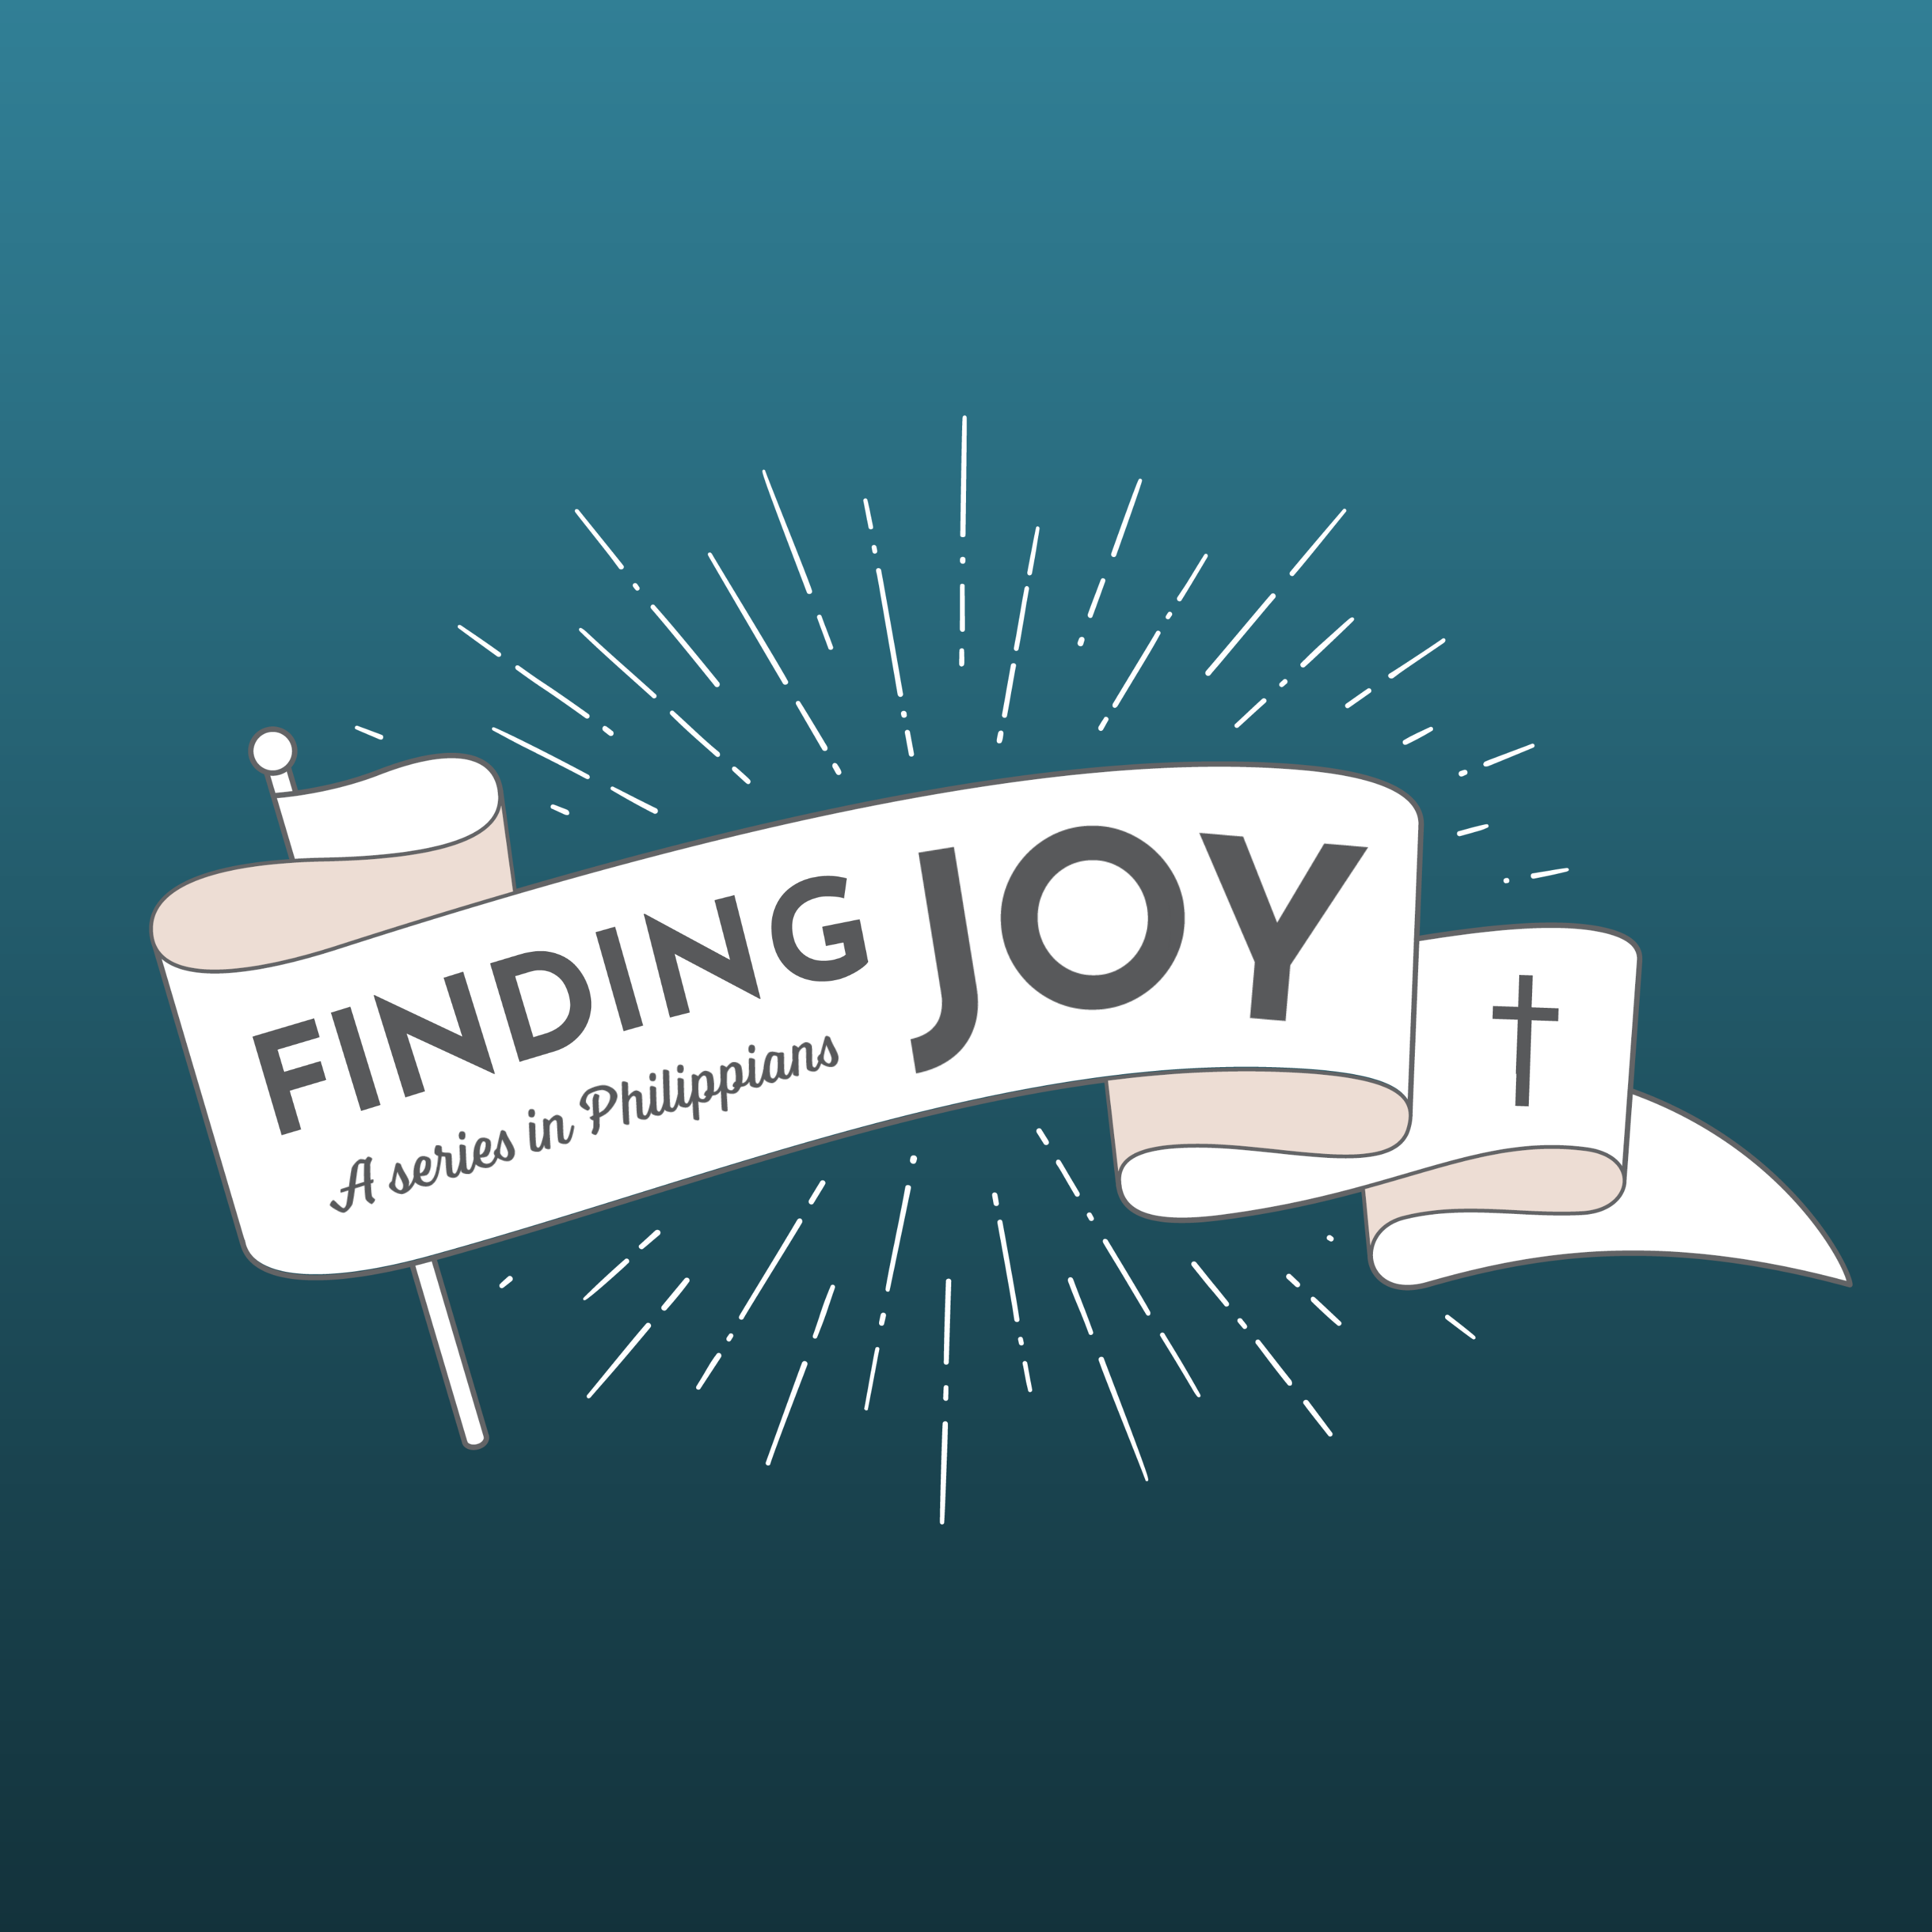 Joy in Faithful Obedience